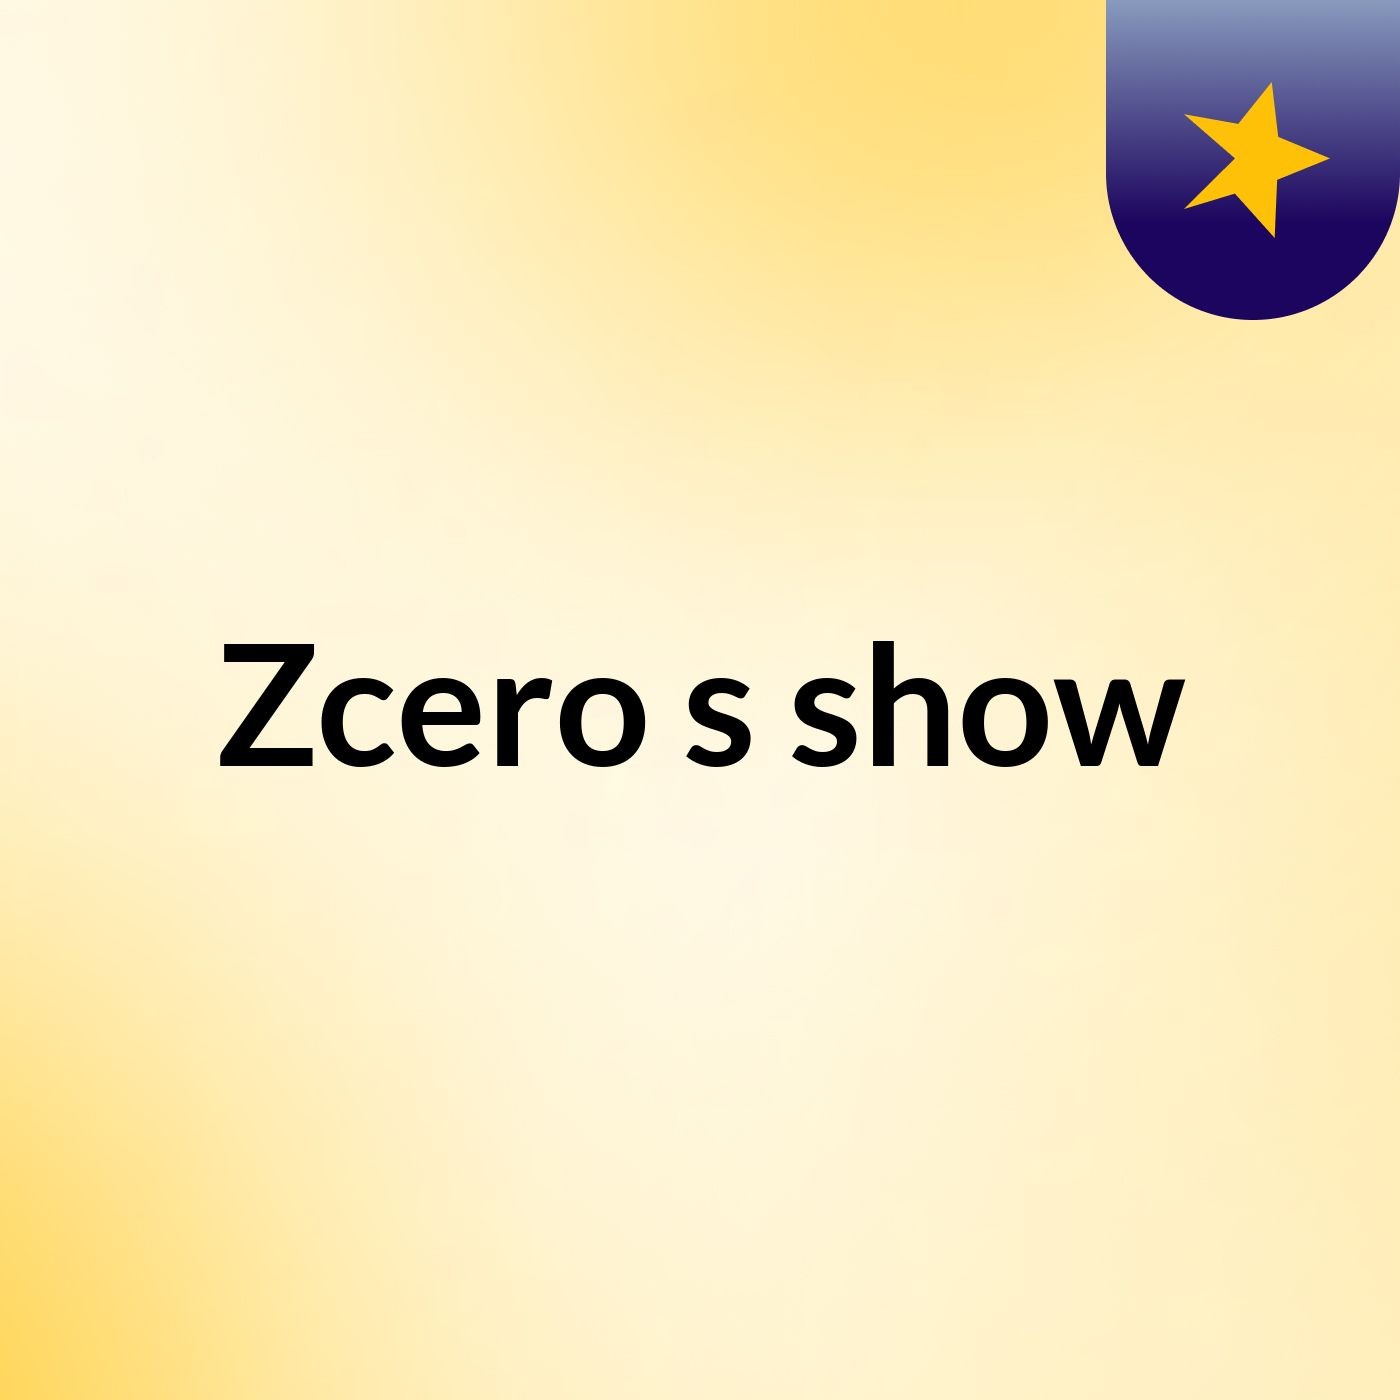 Zcero's show